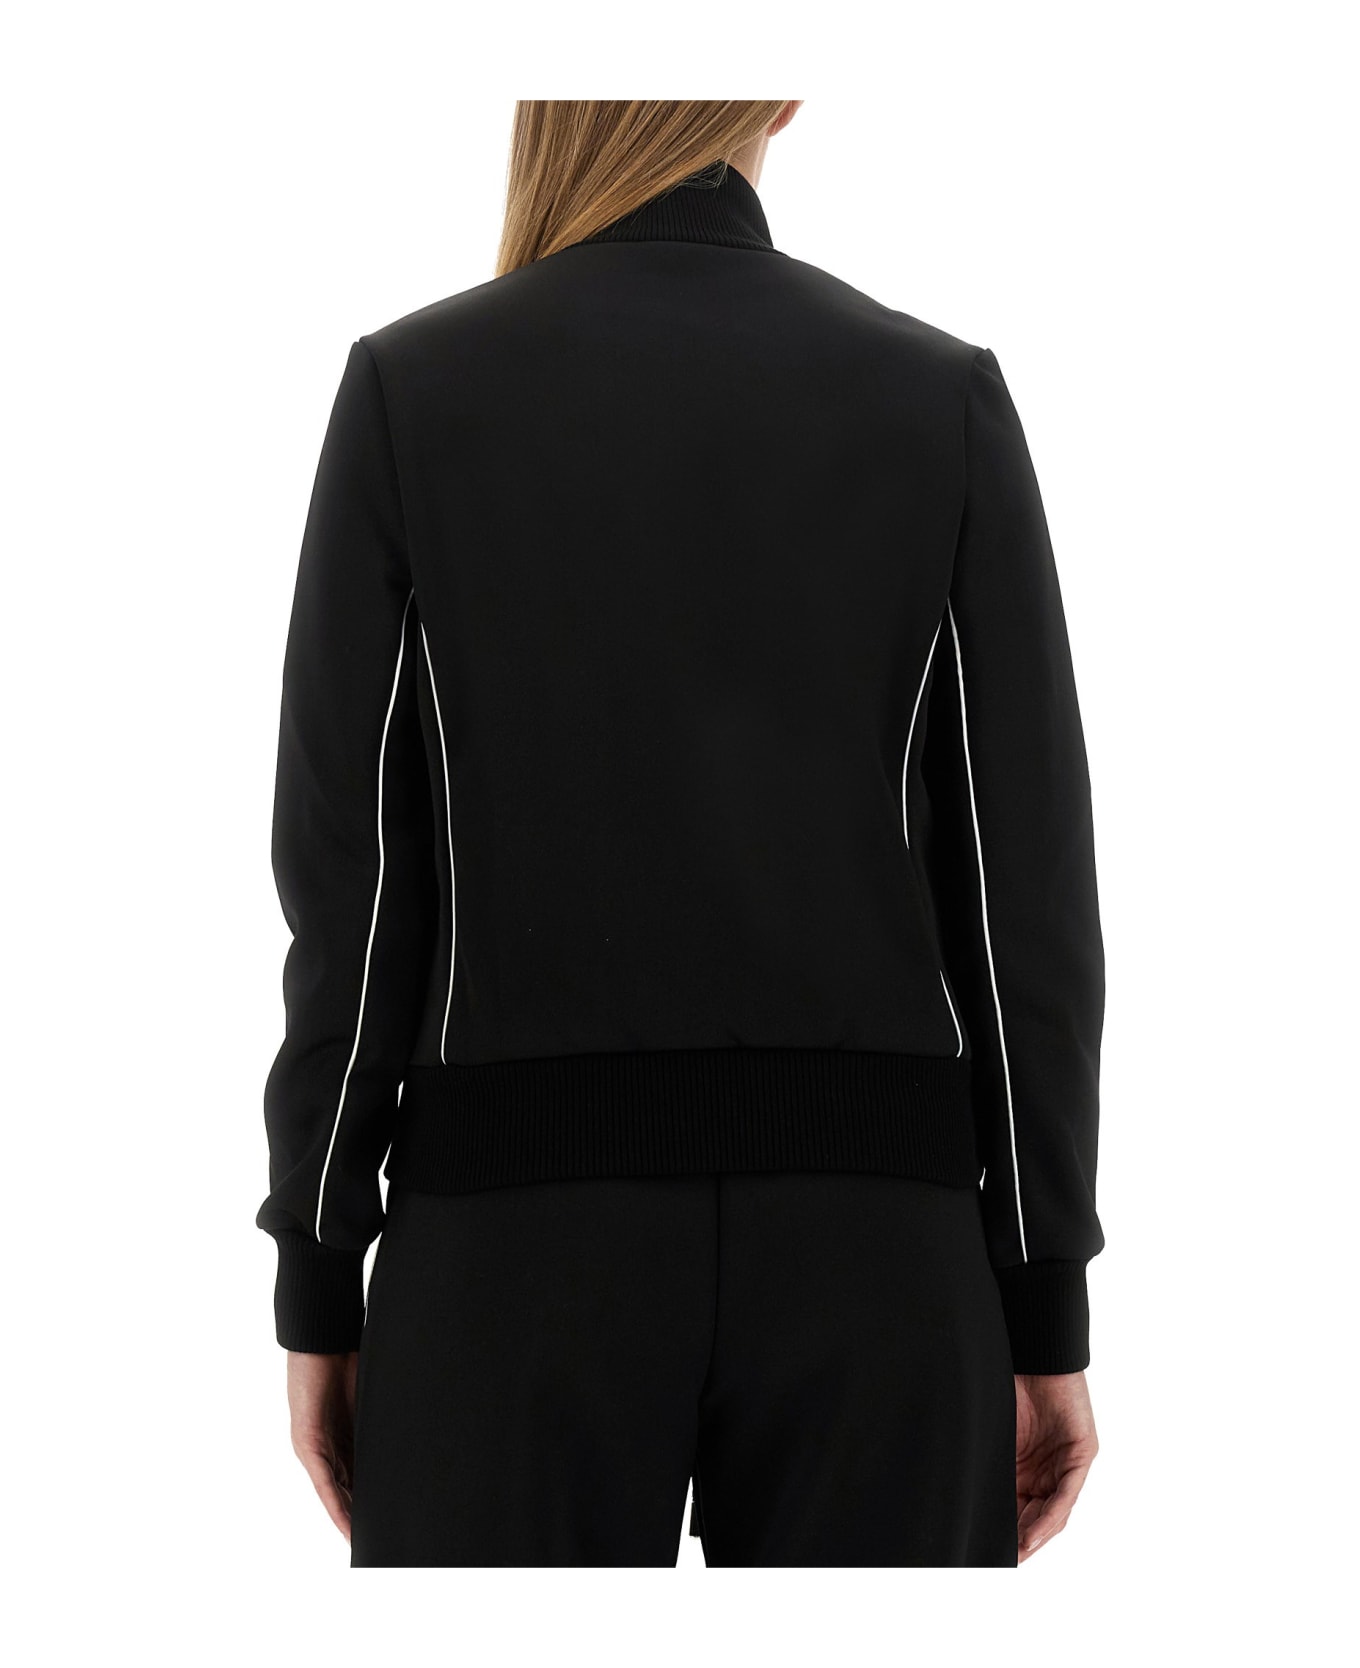 Off-White Technical Fabric Jacket - Black Black